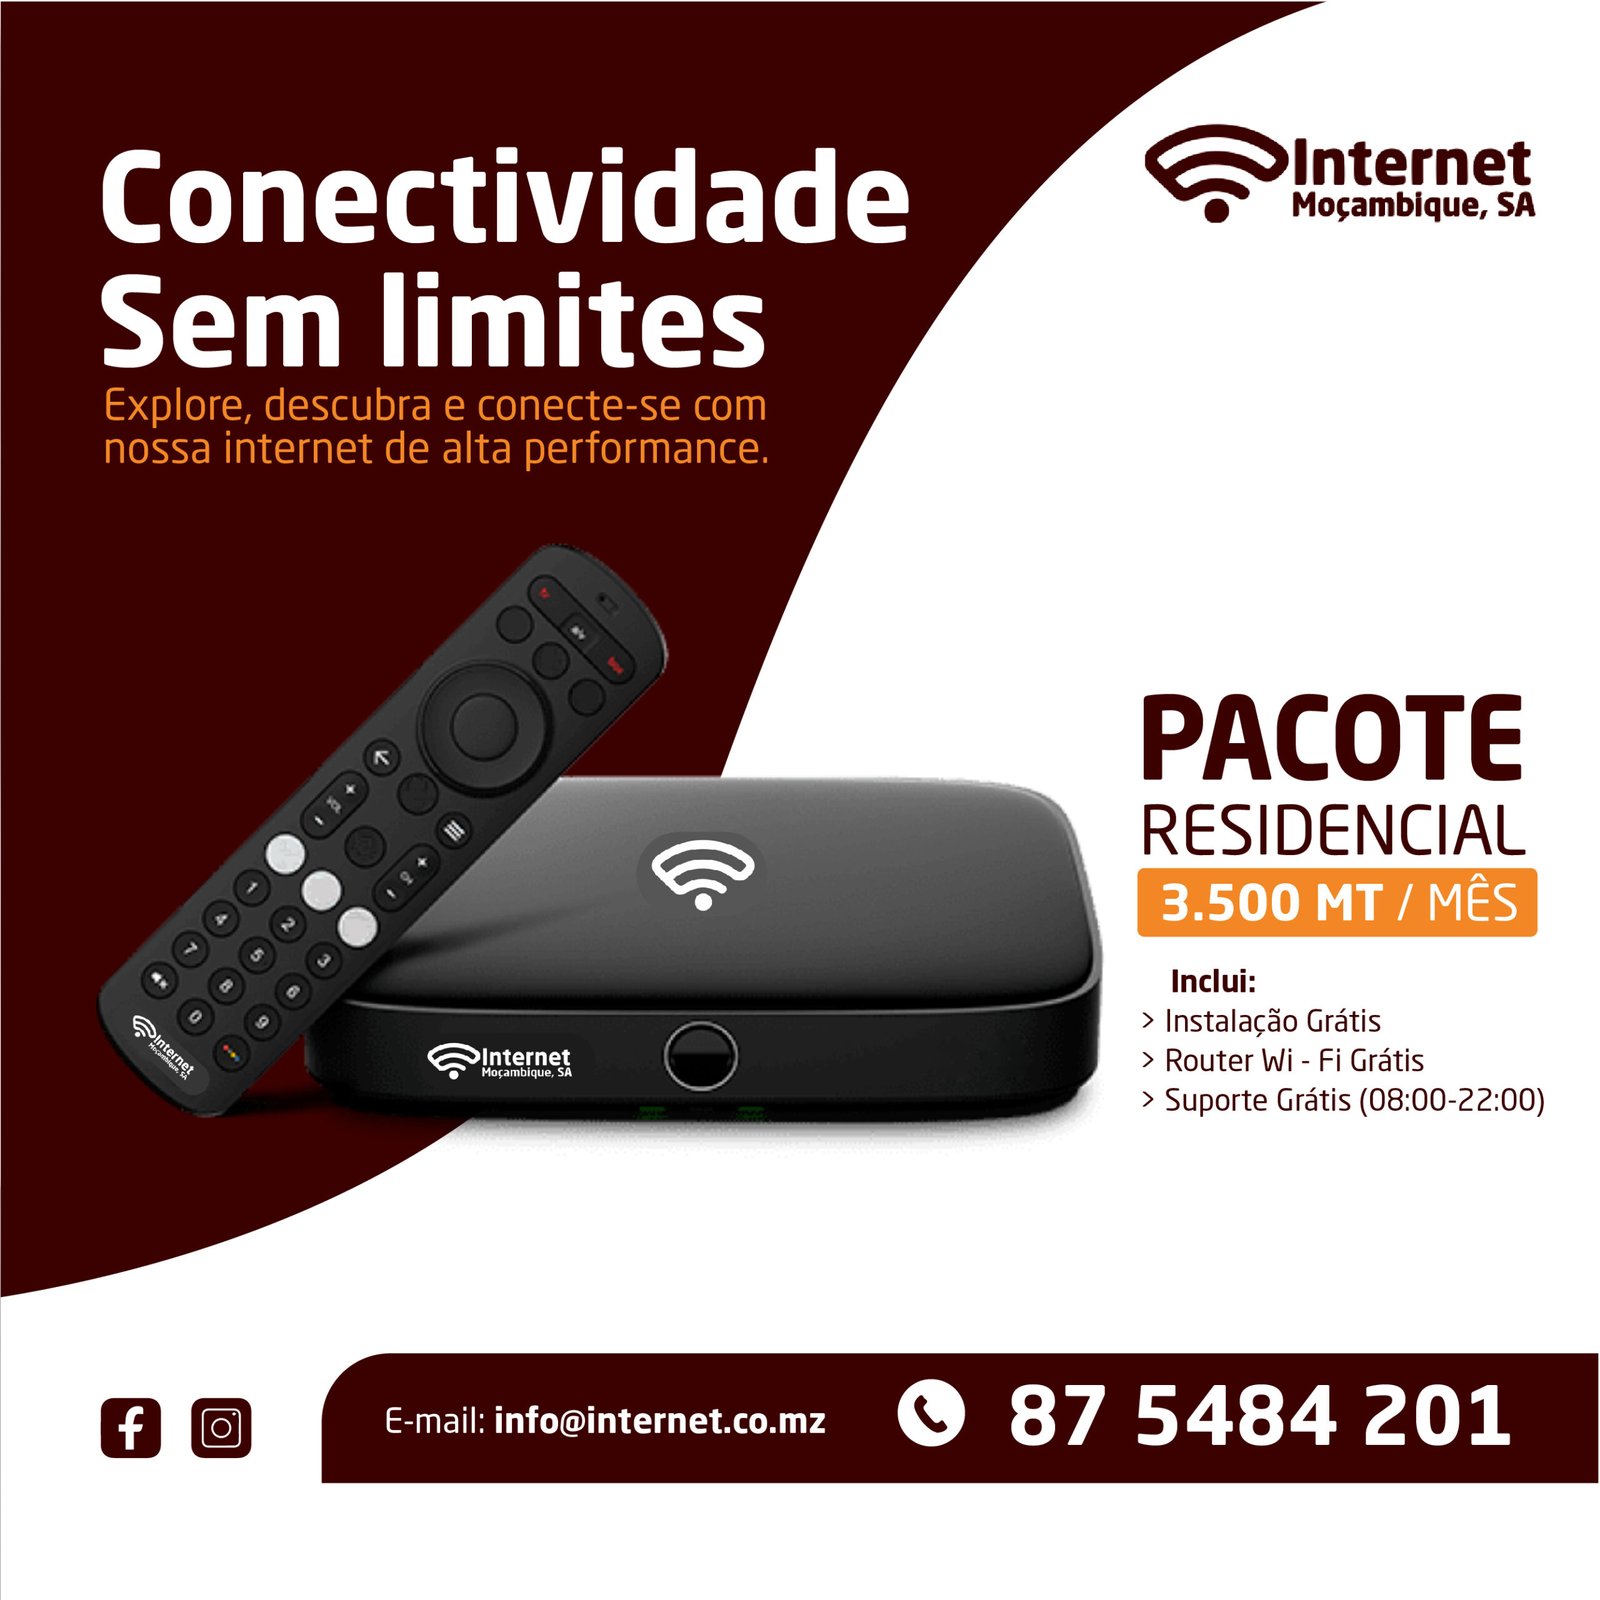 Internet de Moçambique,SA